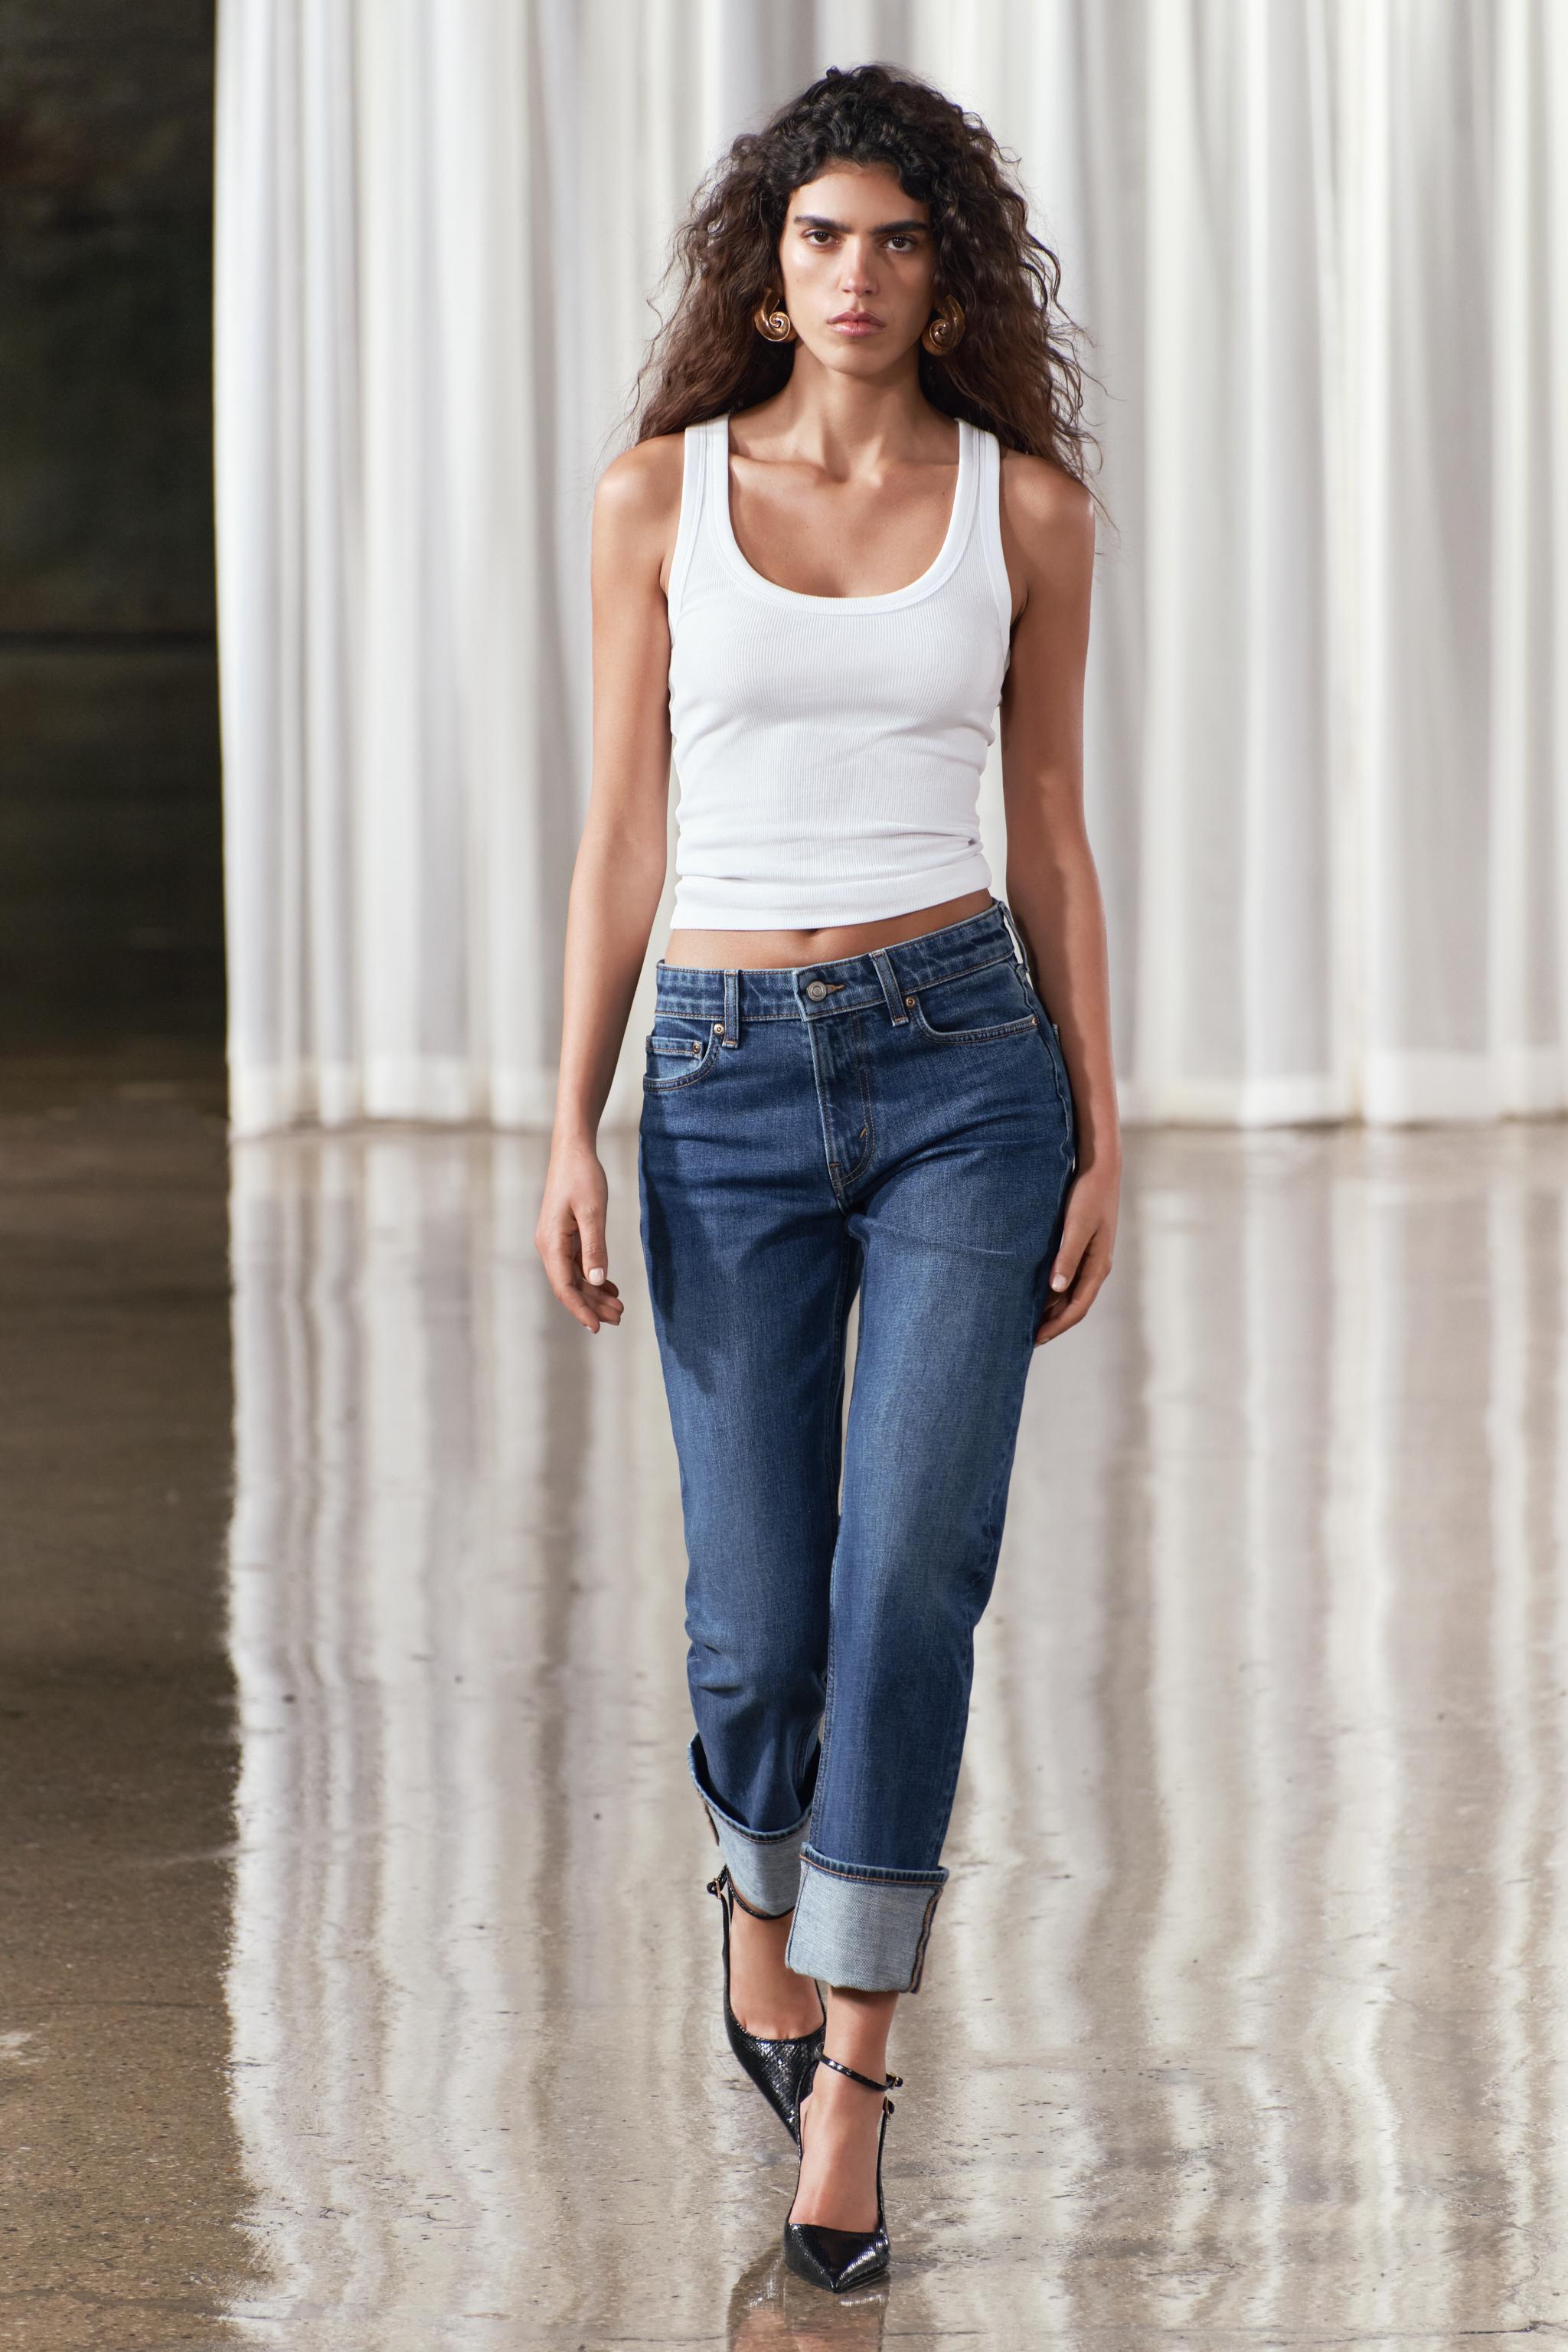 Zara Brown Python Snake Print High Rise Stretch Skinny Jeans Size 4 Pants  NWT